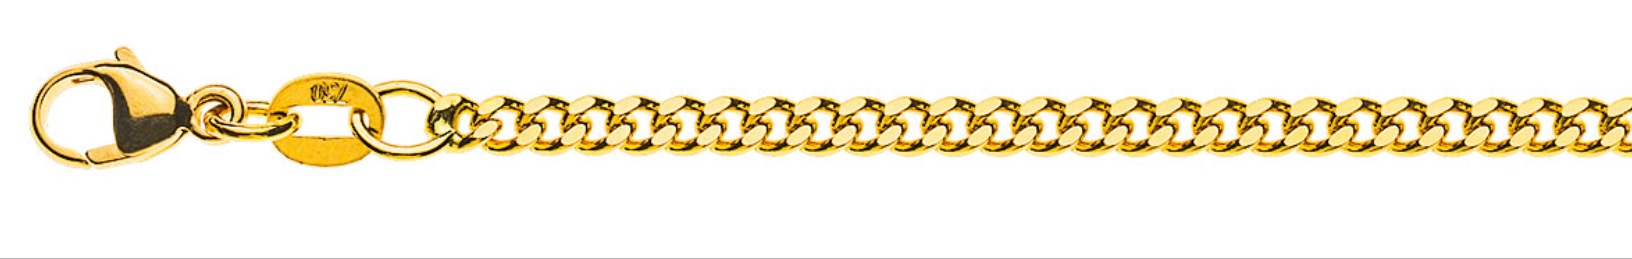 AURONOS Prestige Necklace yellow gold 18K curb chain polished 40cm 2.6mm